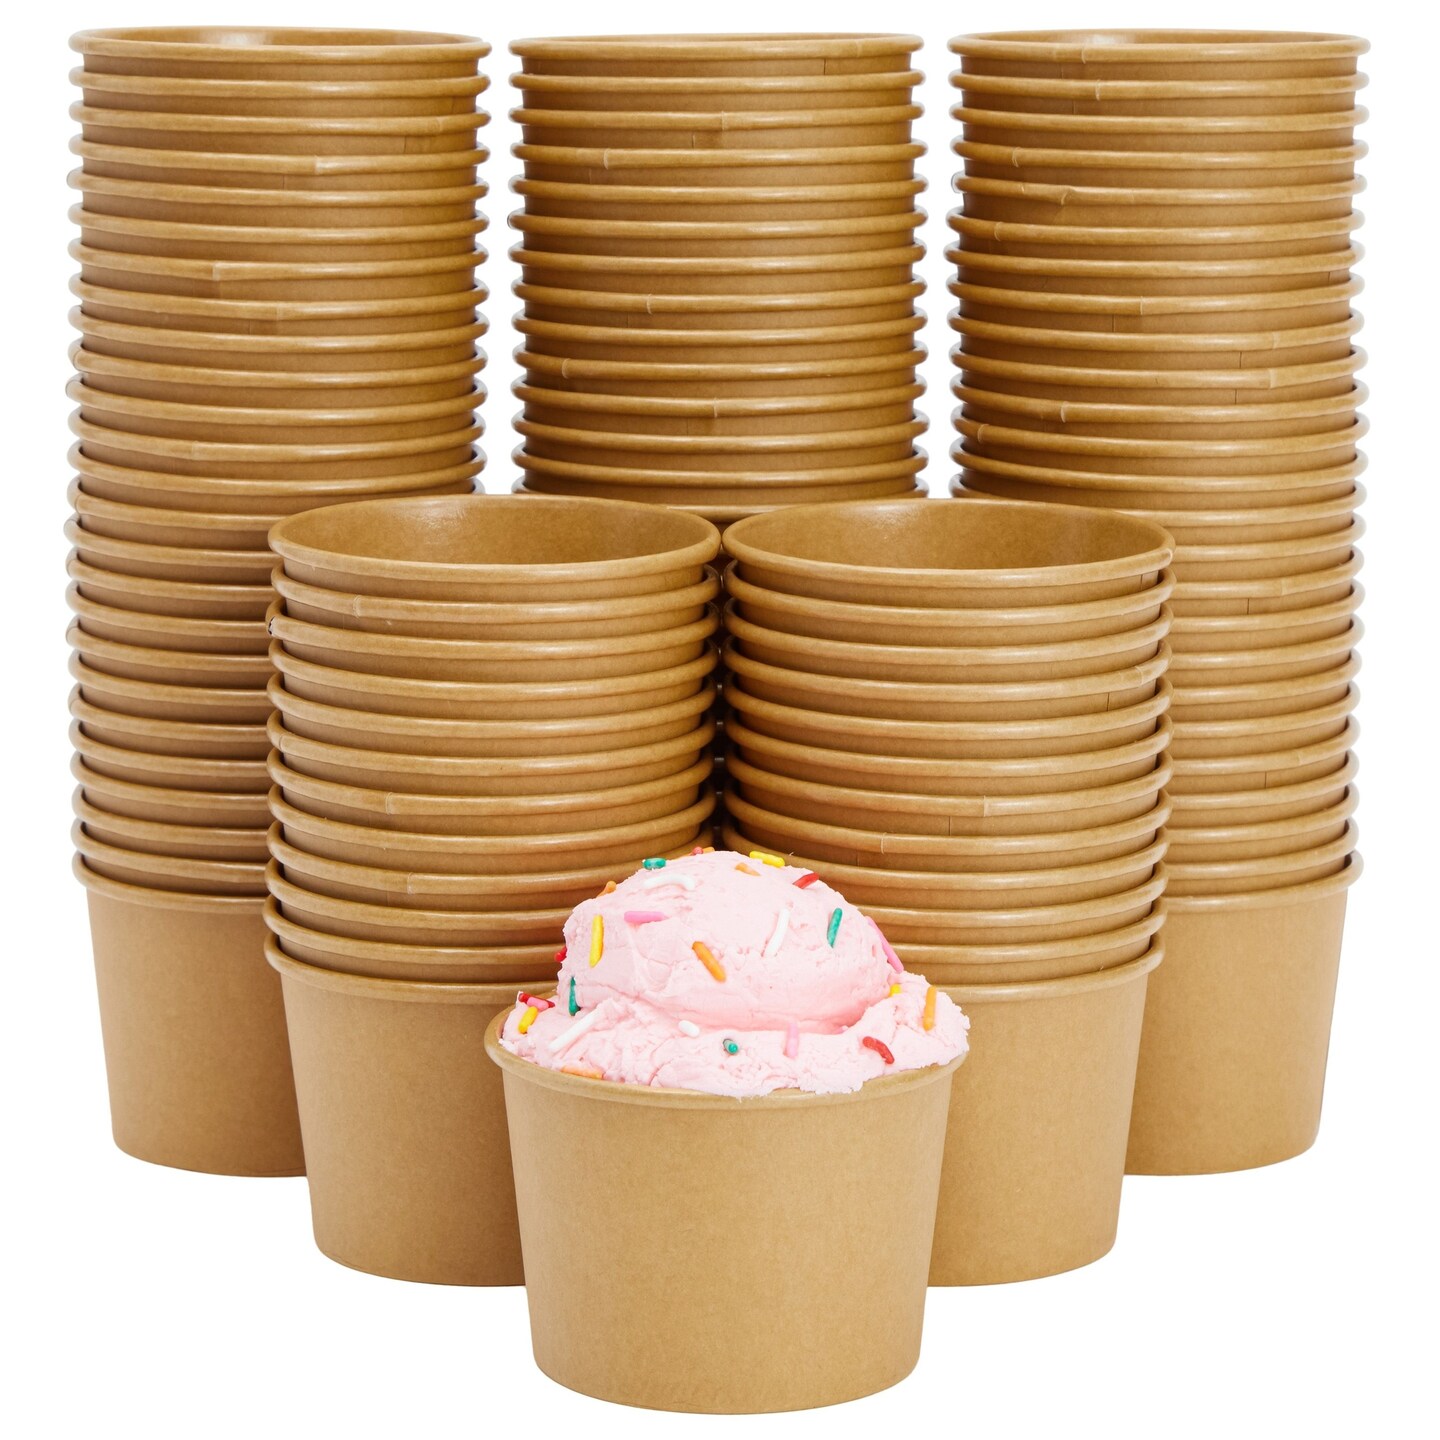 100 Pack Paper Ice Cream Cups, Disposable Dessert Bowls for Sundae Bar, Frozen Yogurt, Brown (8 oz)